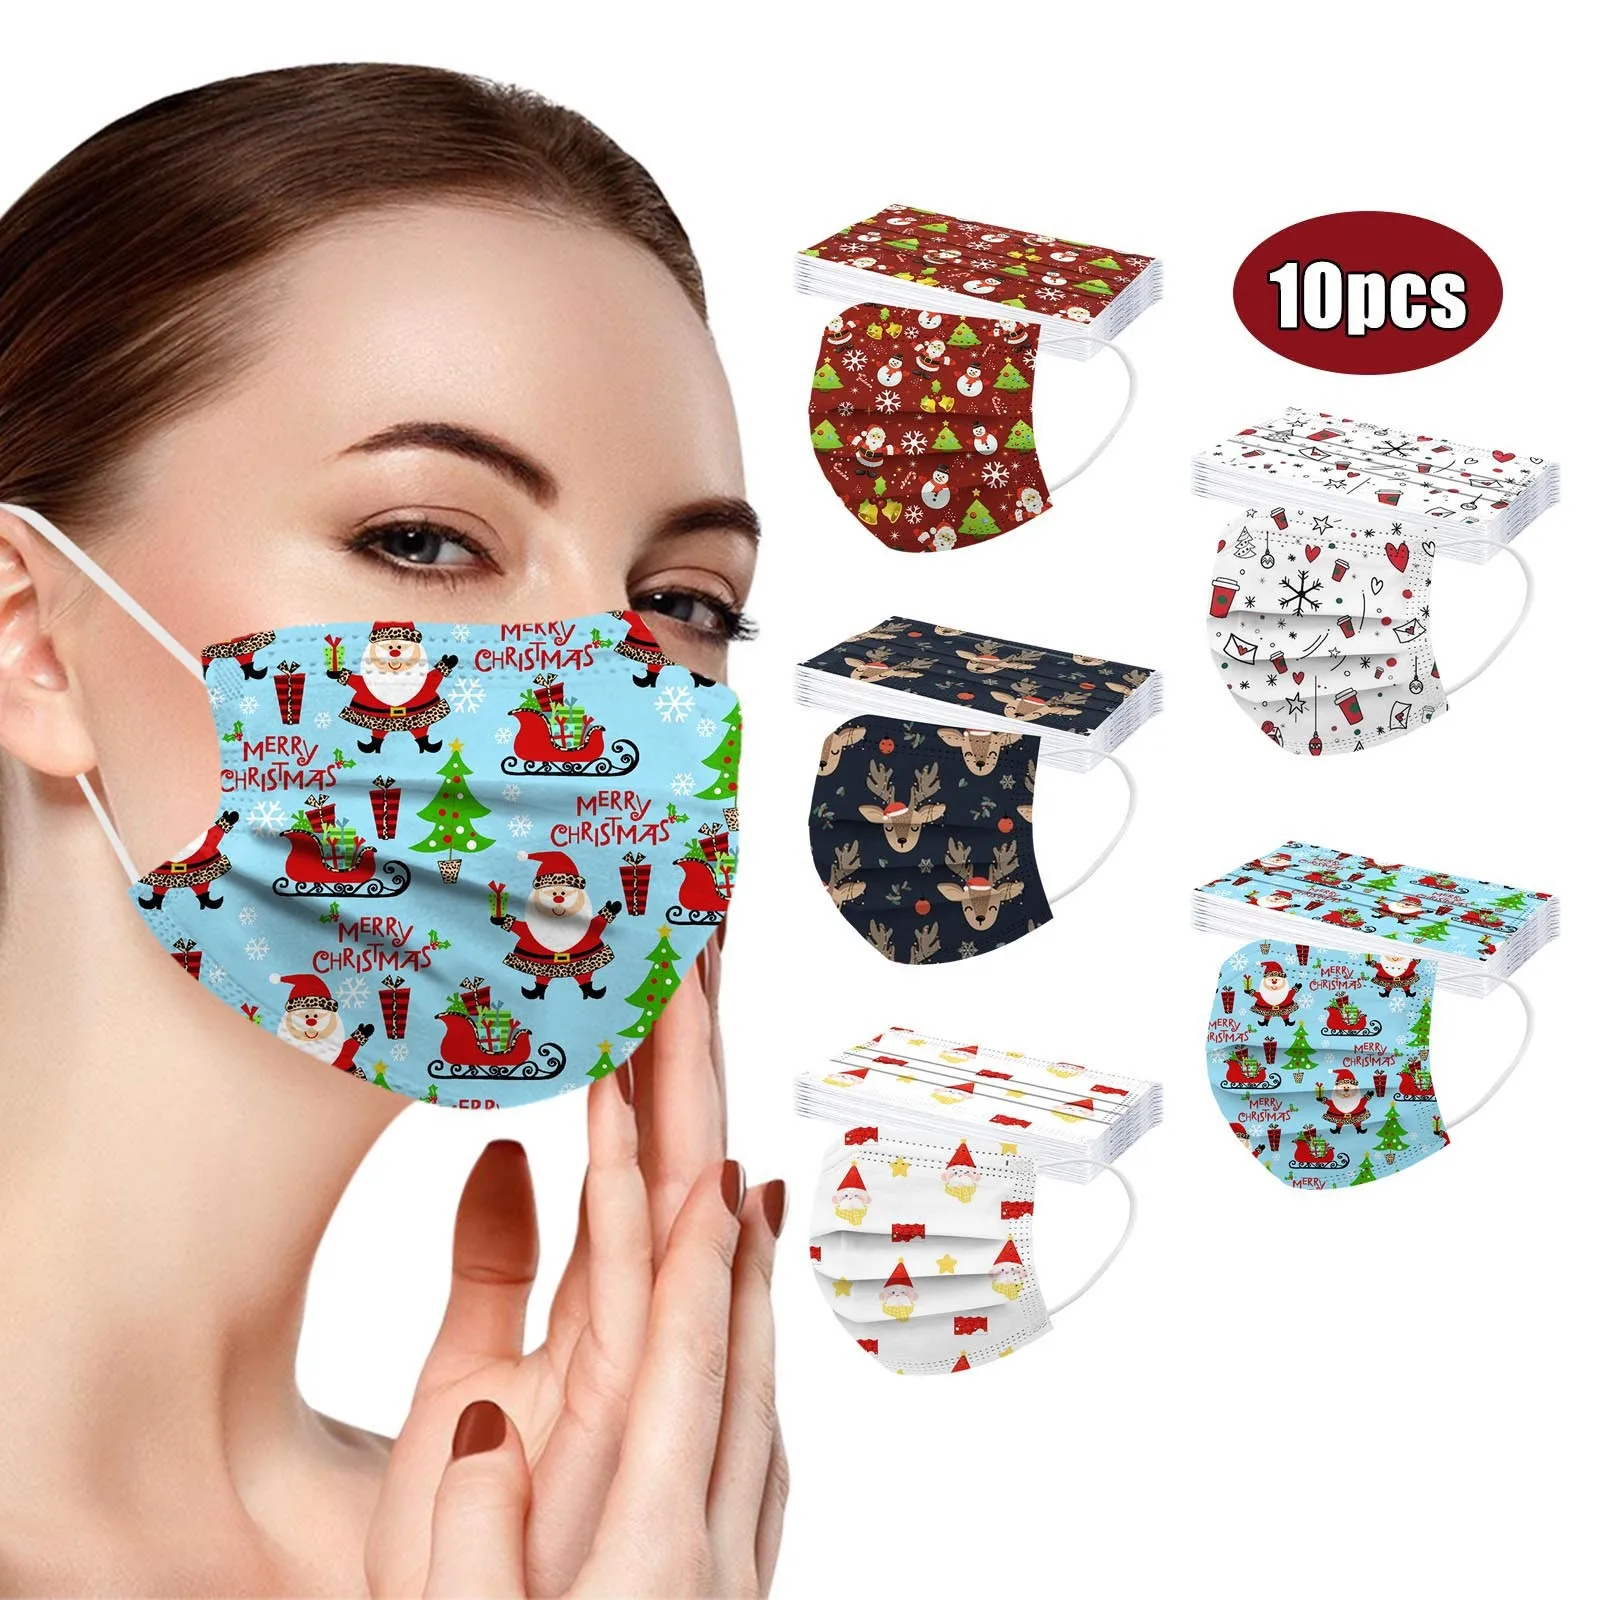 

10pcs Adult's Christmas Prints Disposable Face Mask Industrial 3ply Masks Dustproof Filter Pm2.5 Mask Earloop Bandage Masque